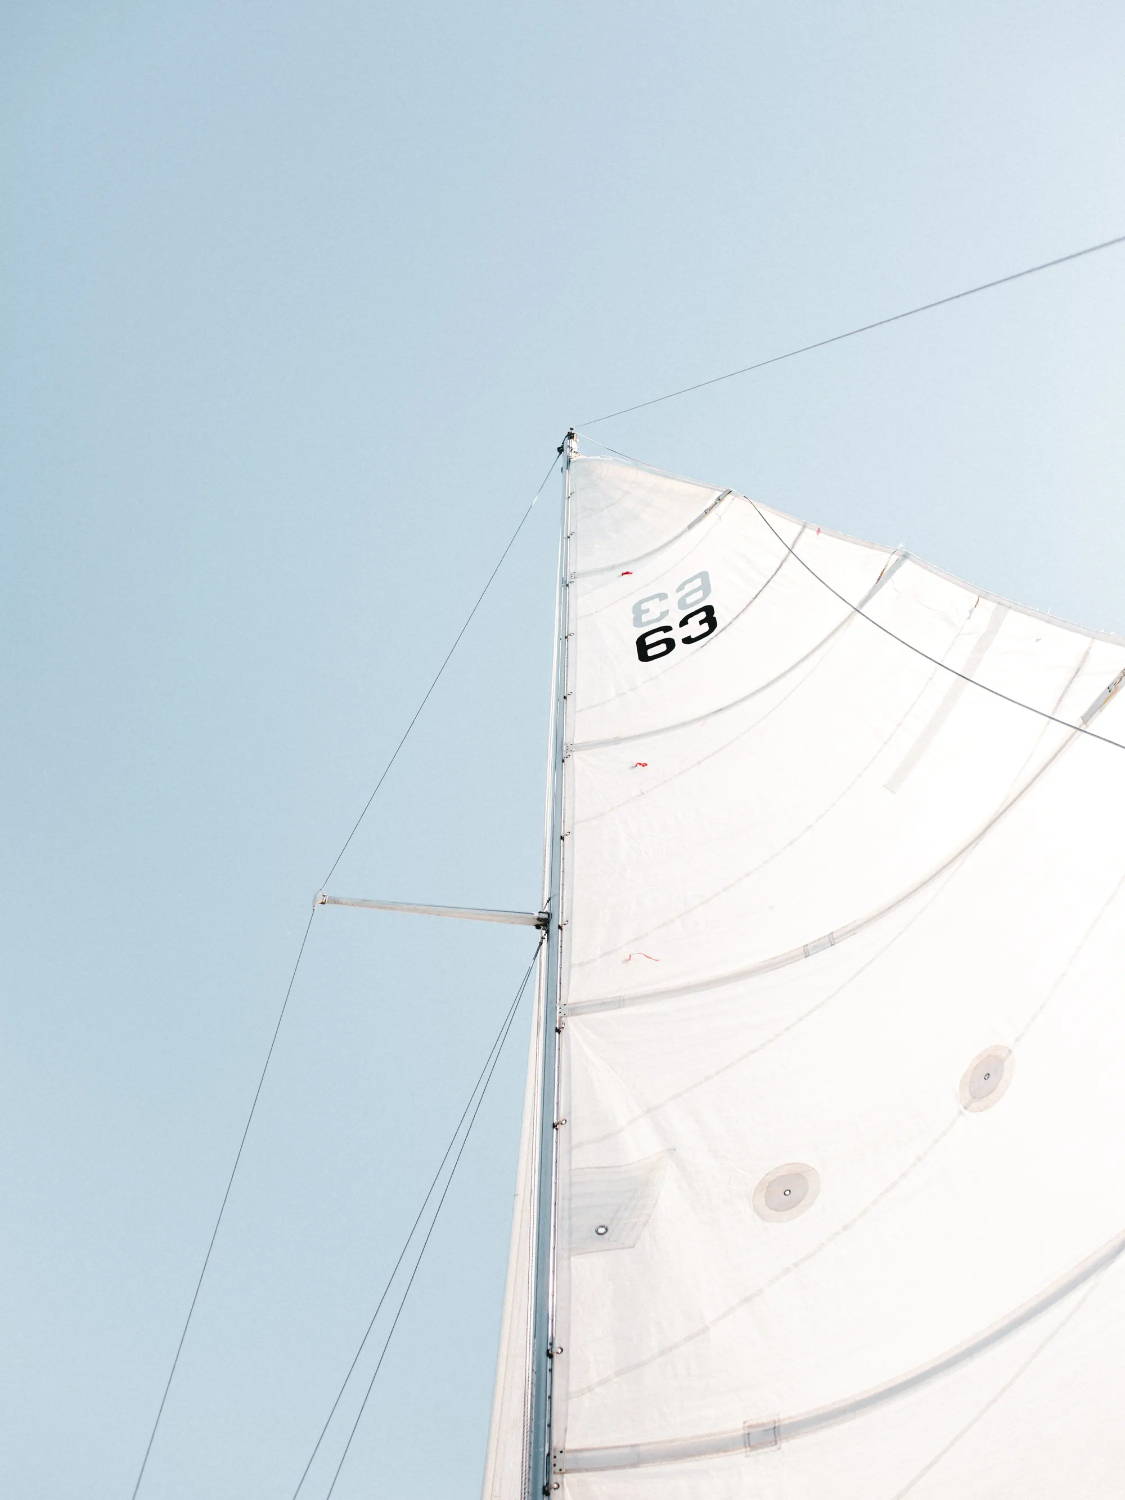 The main sail of a sailboat set against a blue clear sky